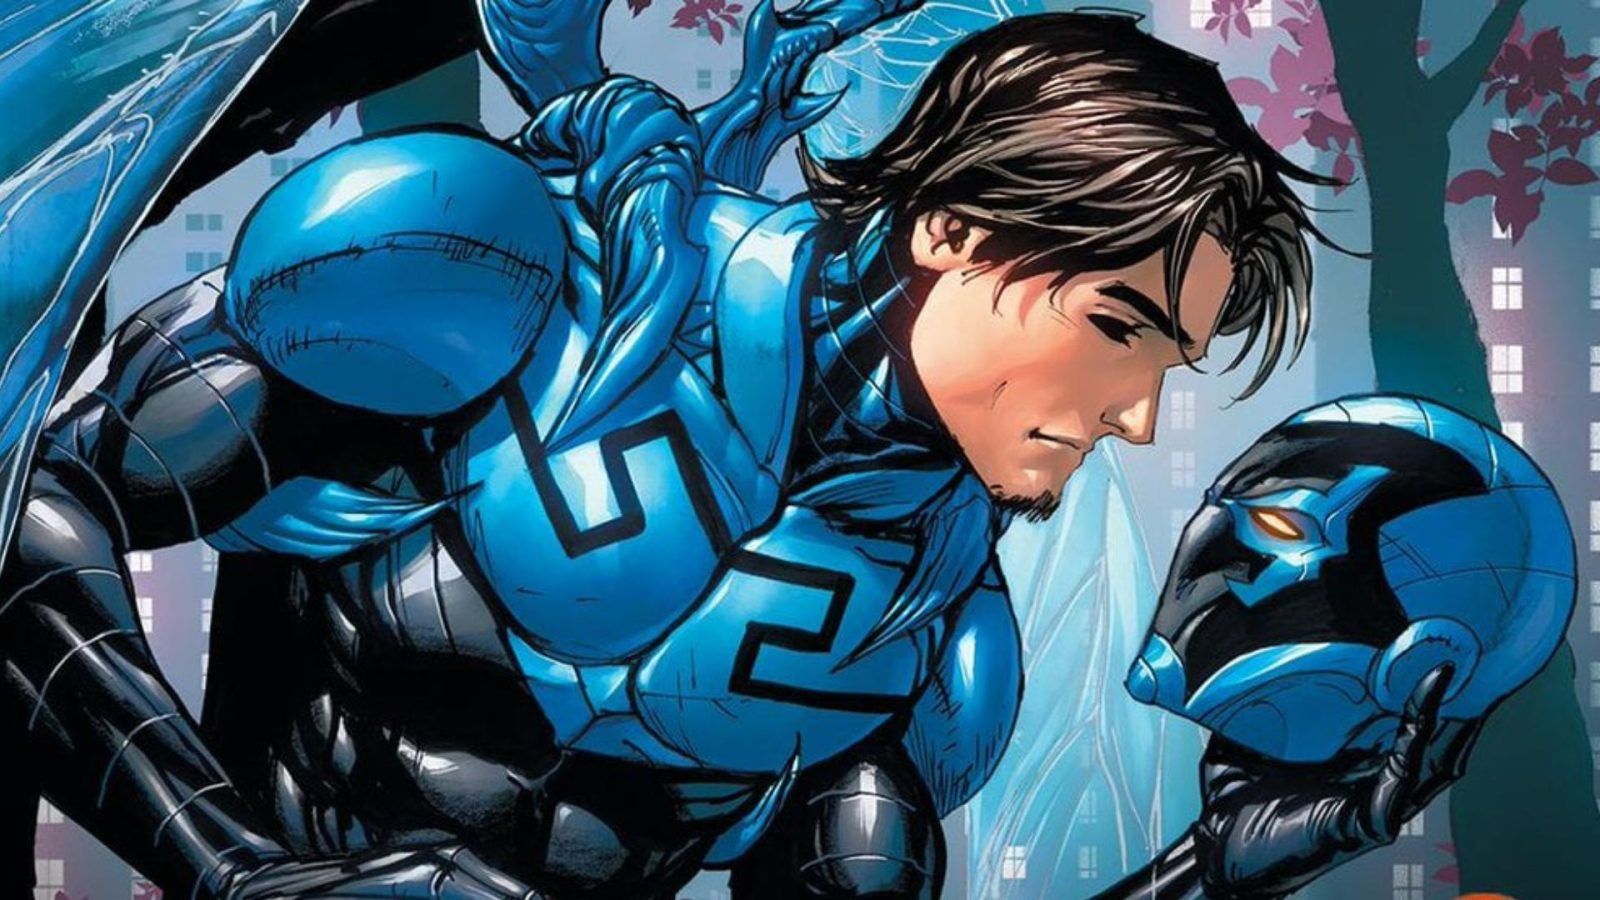 Blue Beetle' Review: DC Superhero Pic Has Heart, Humor & A